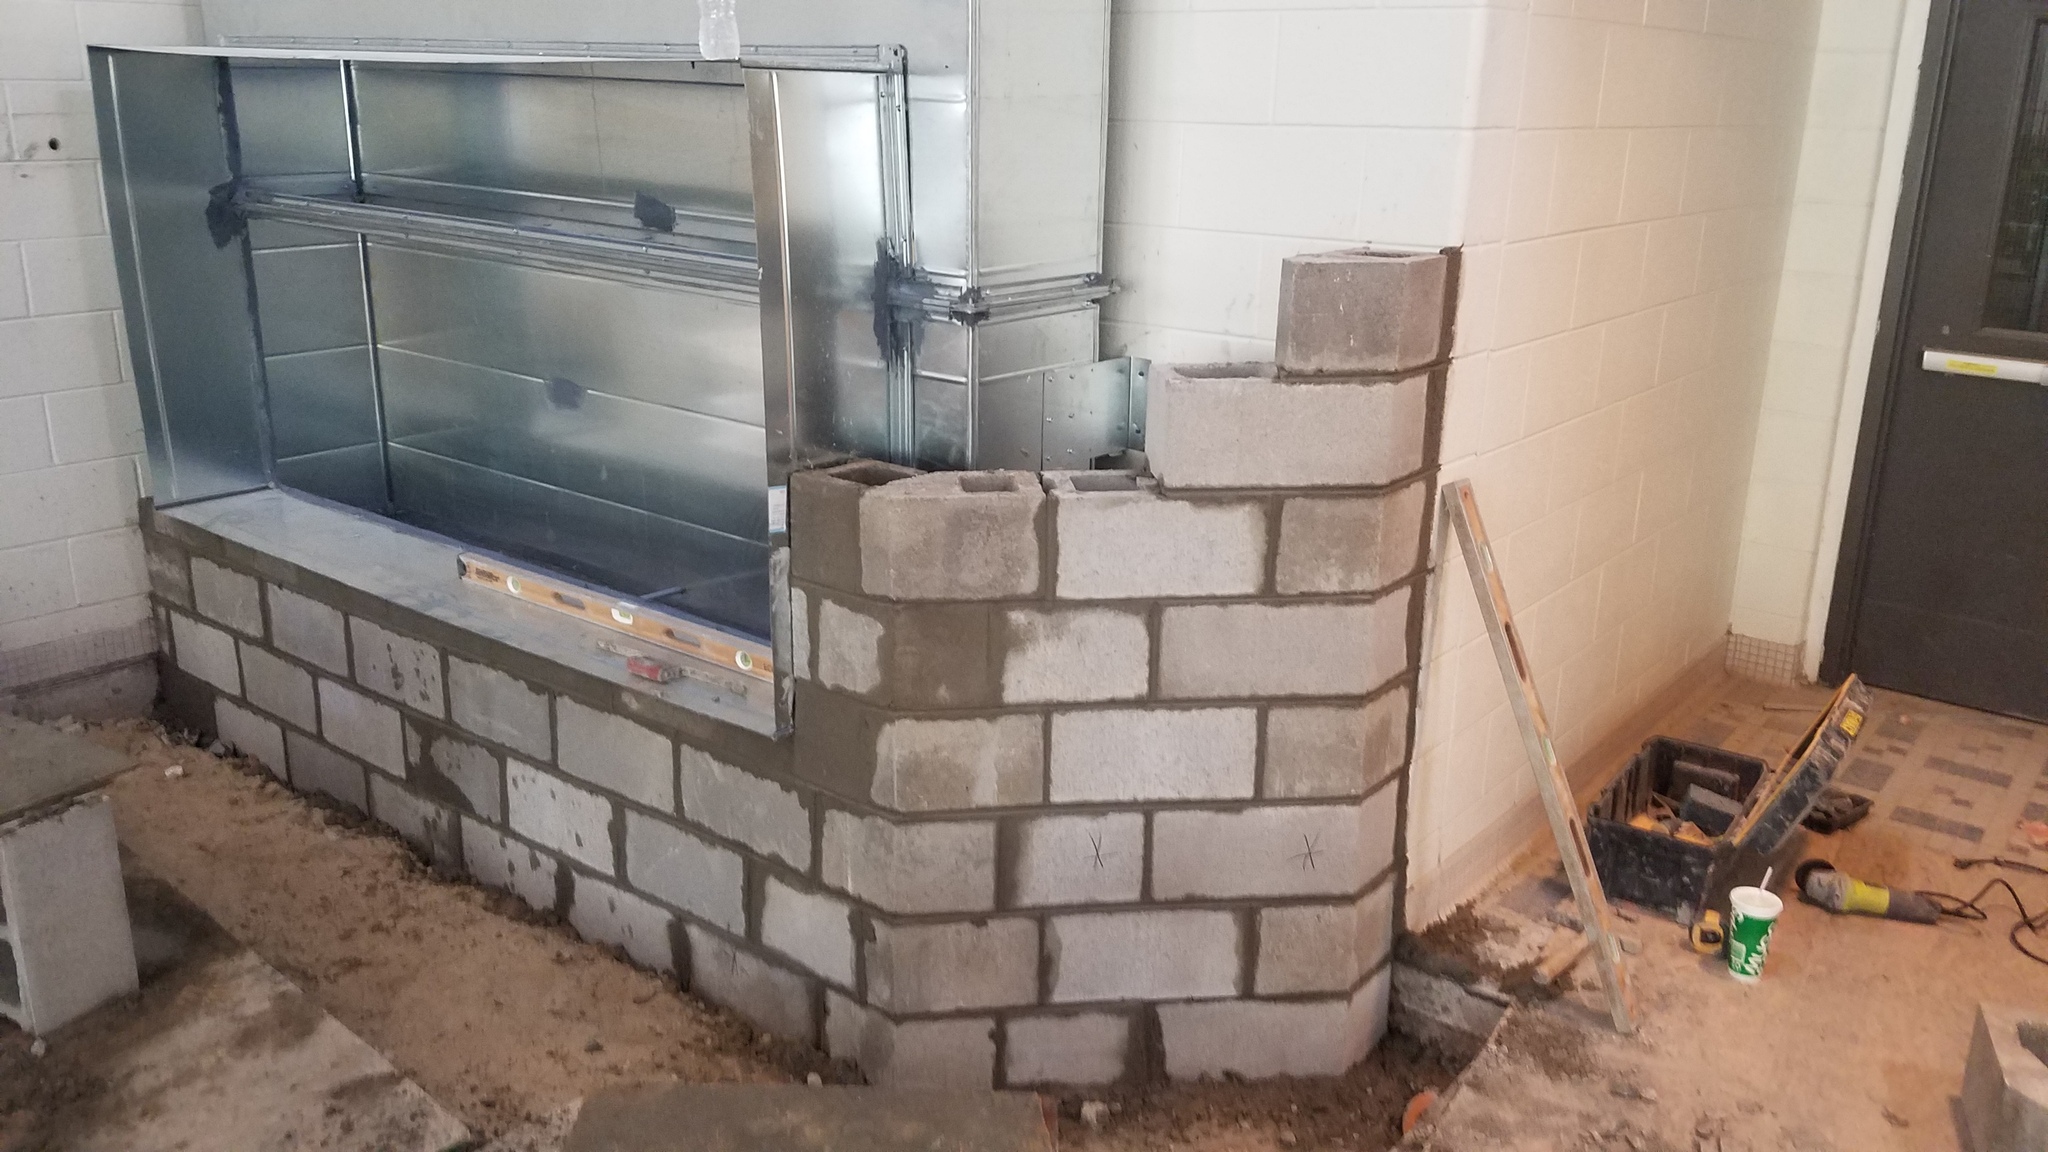 Construction around wall unit